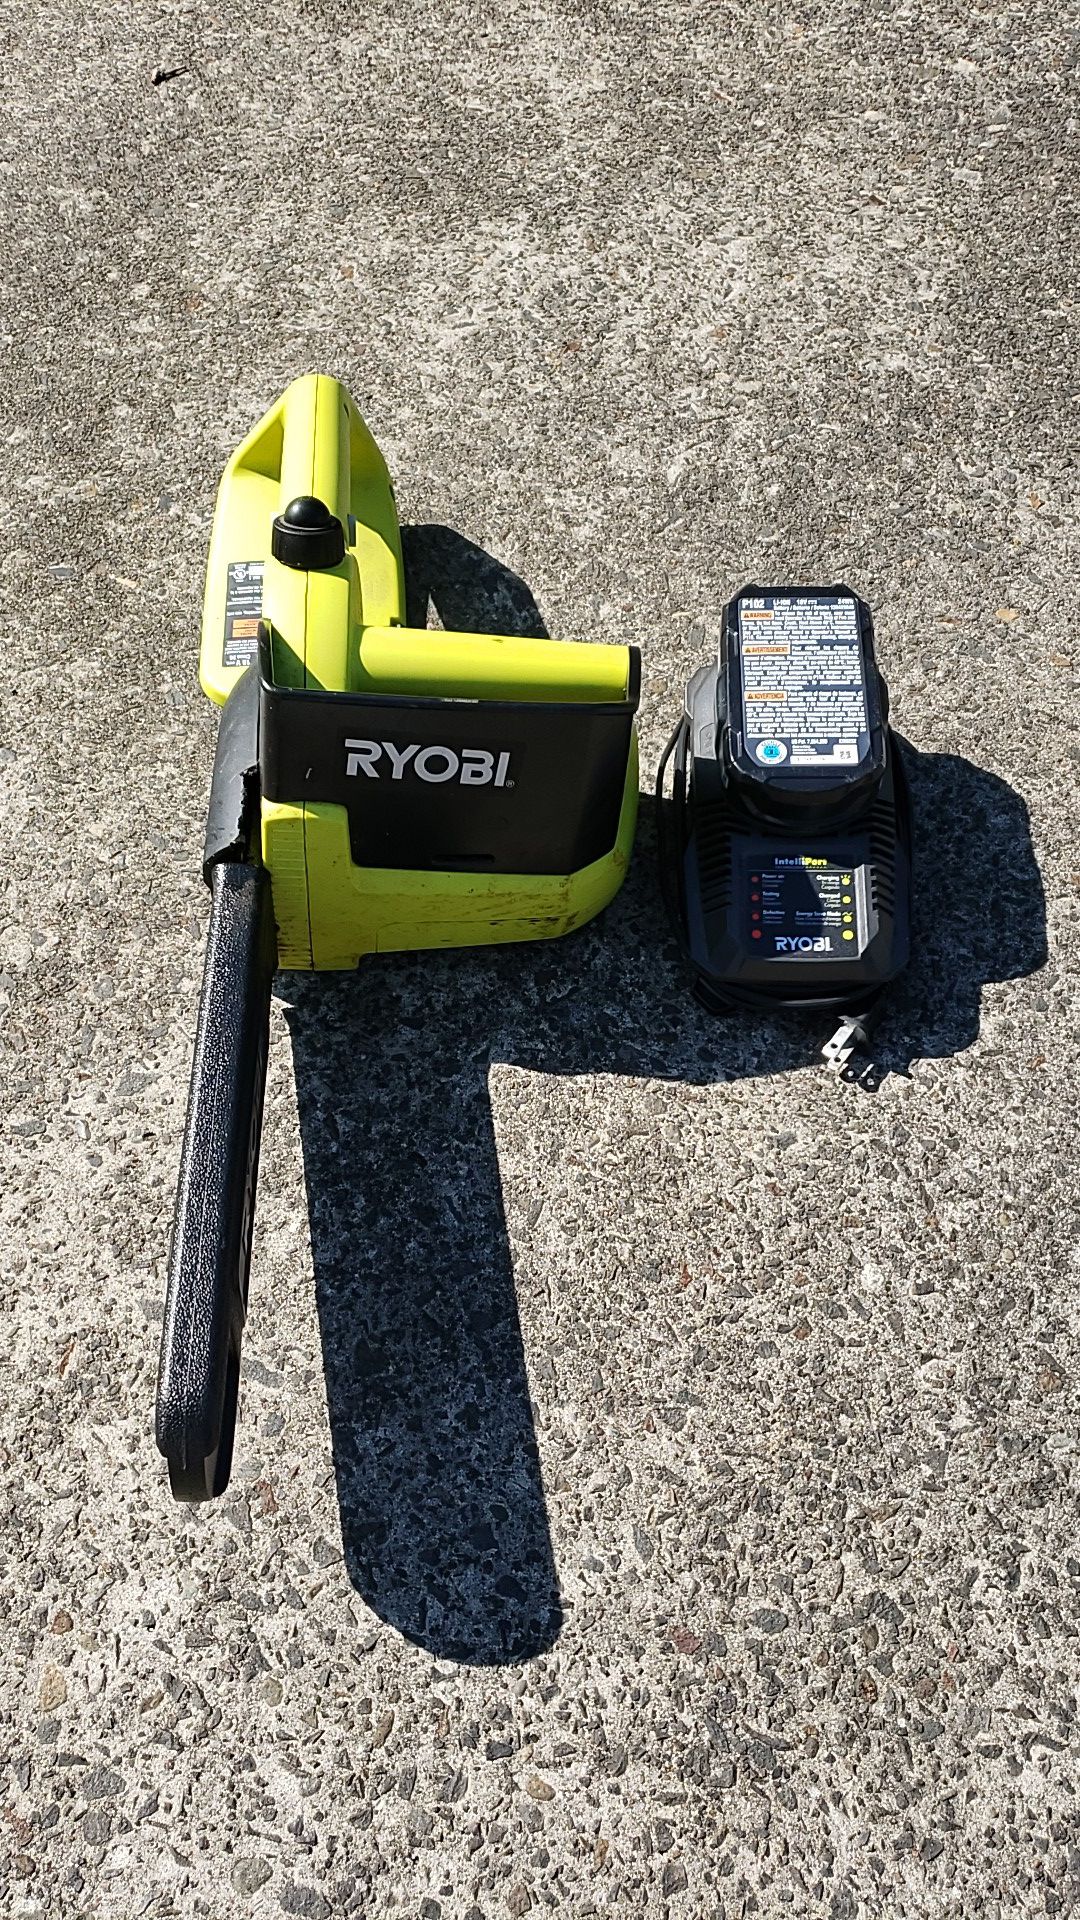 Ryobi One cordless chainsaw